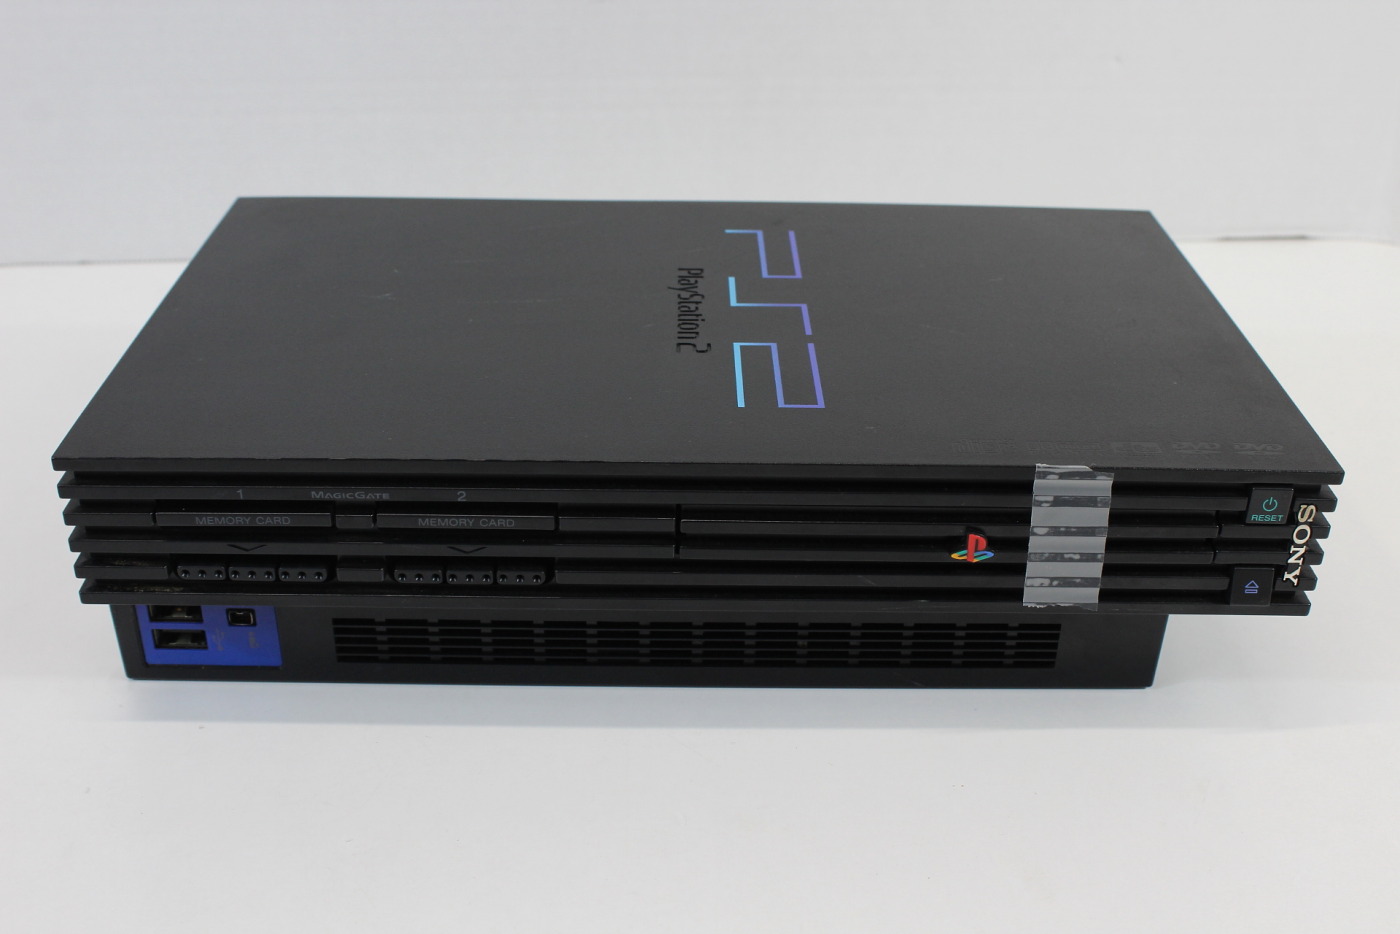 Sony PlayStation 2 Console - Black : Playstation 2, sony playstation 2 